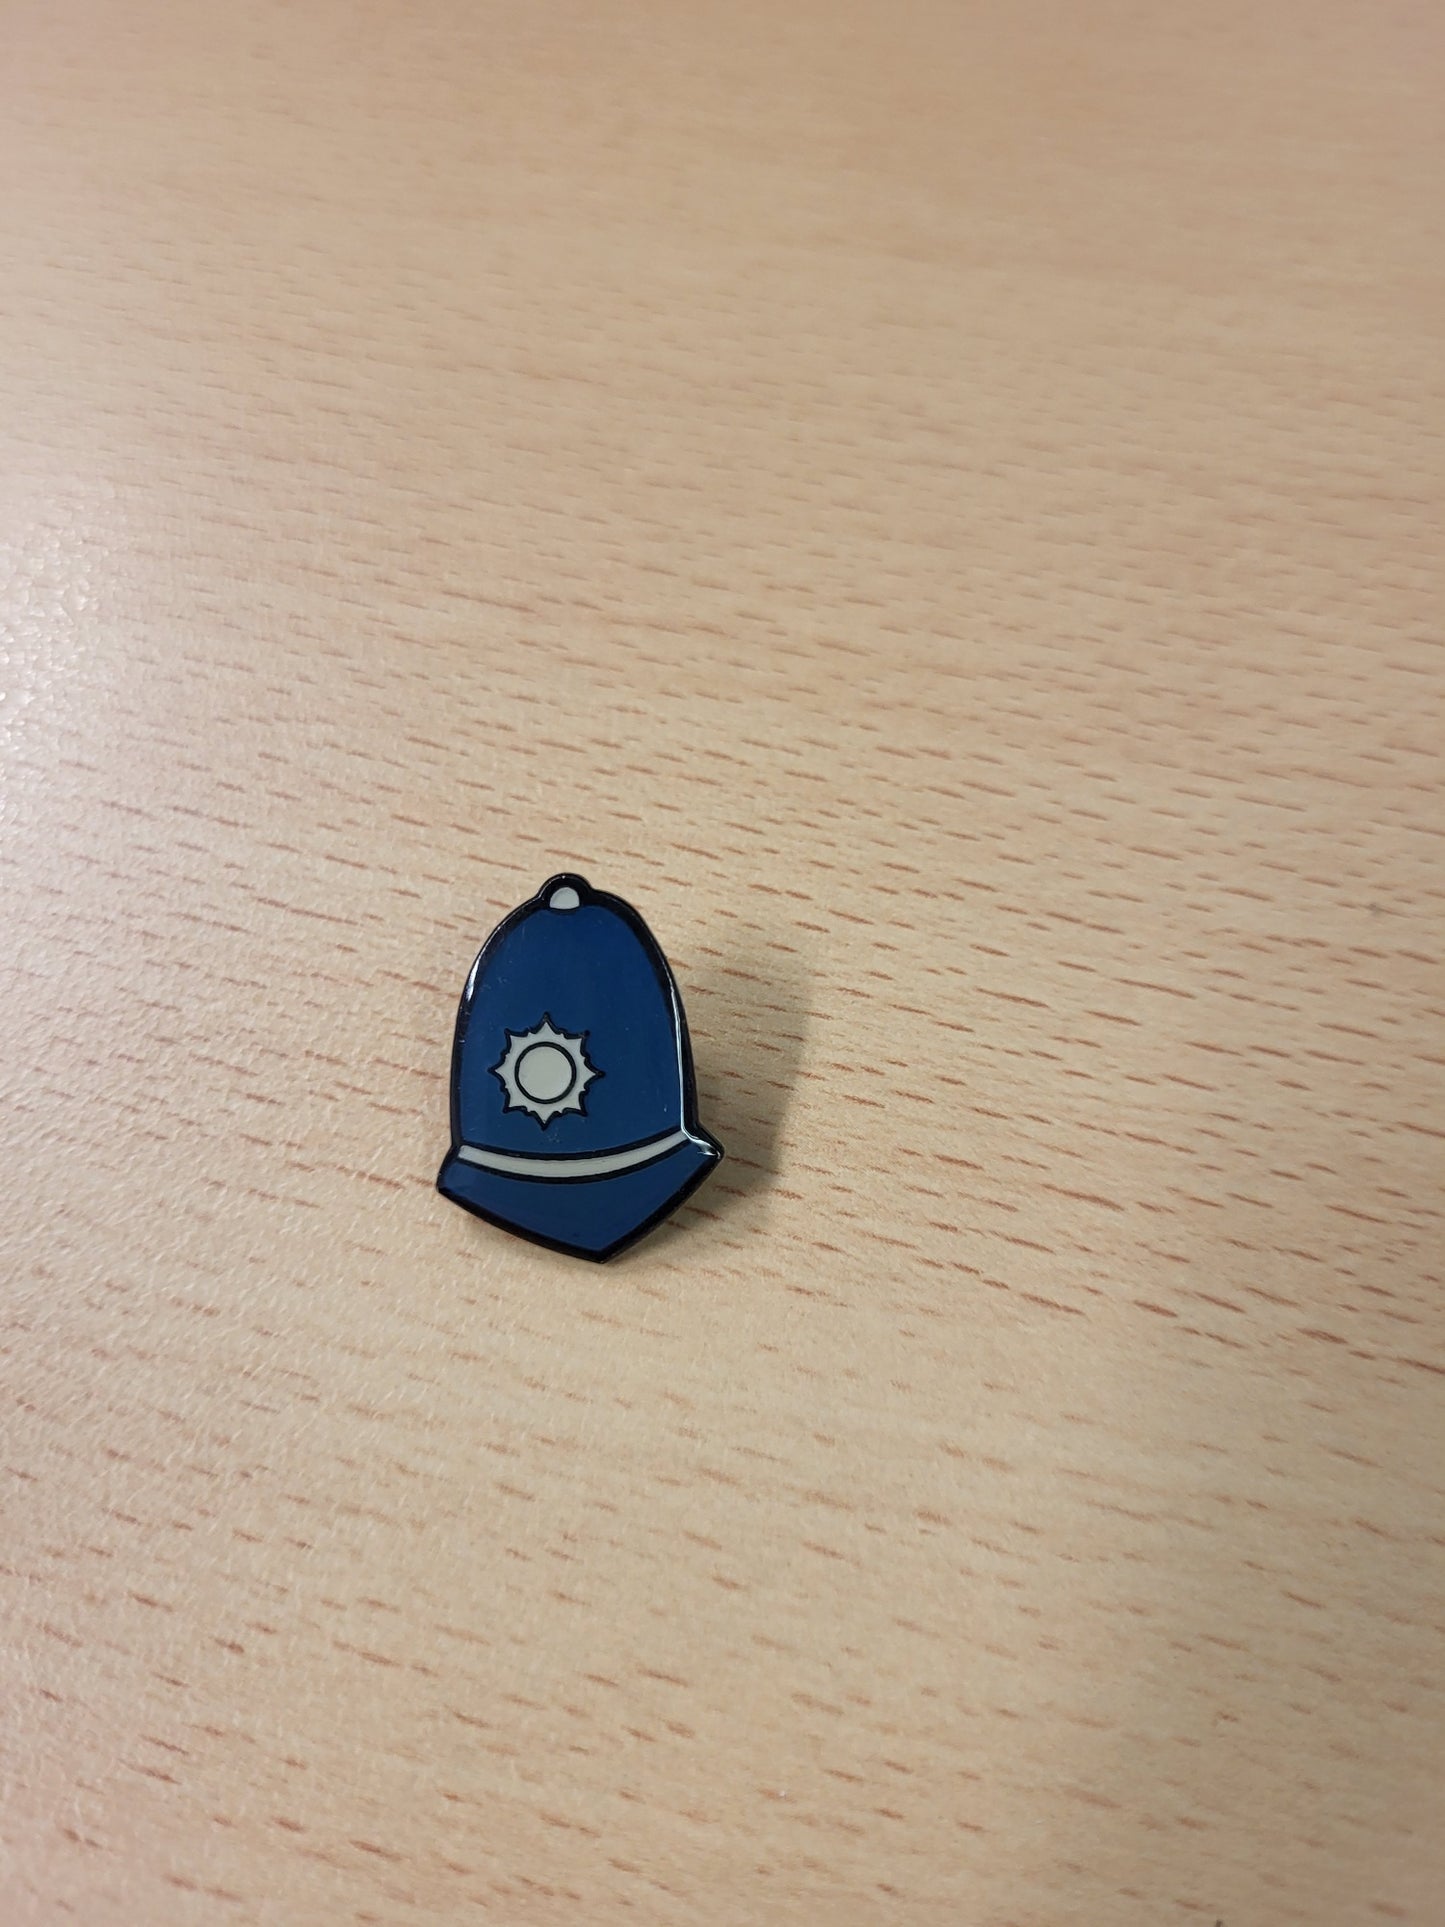 Police Helmet Hat Pin Badge